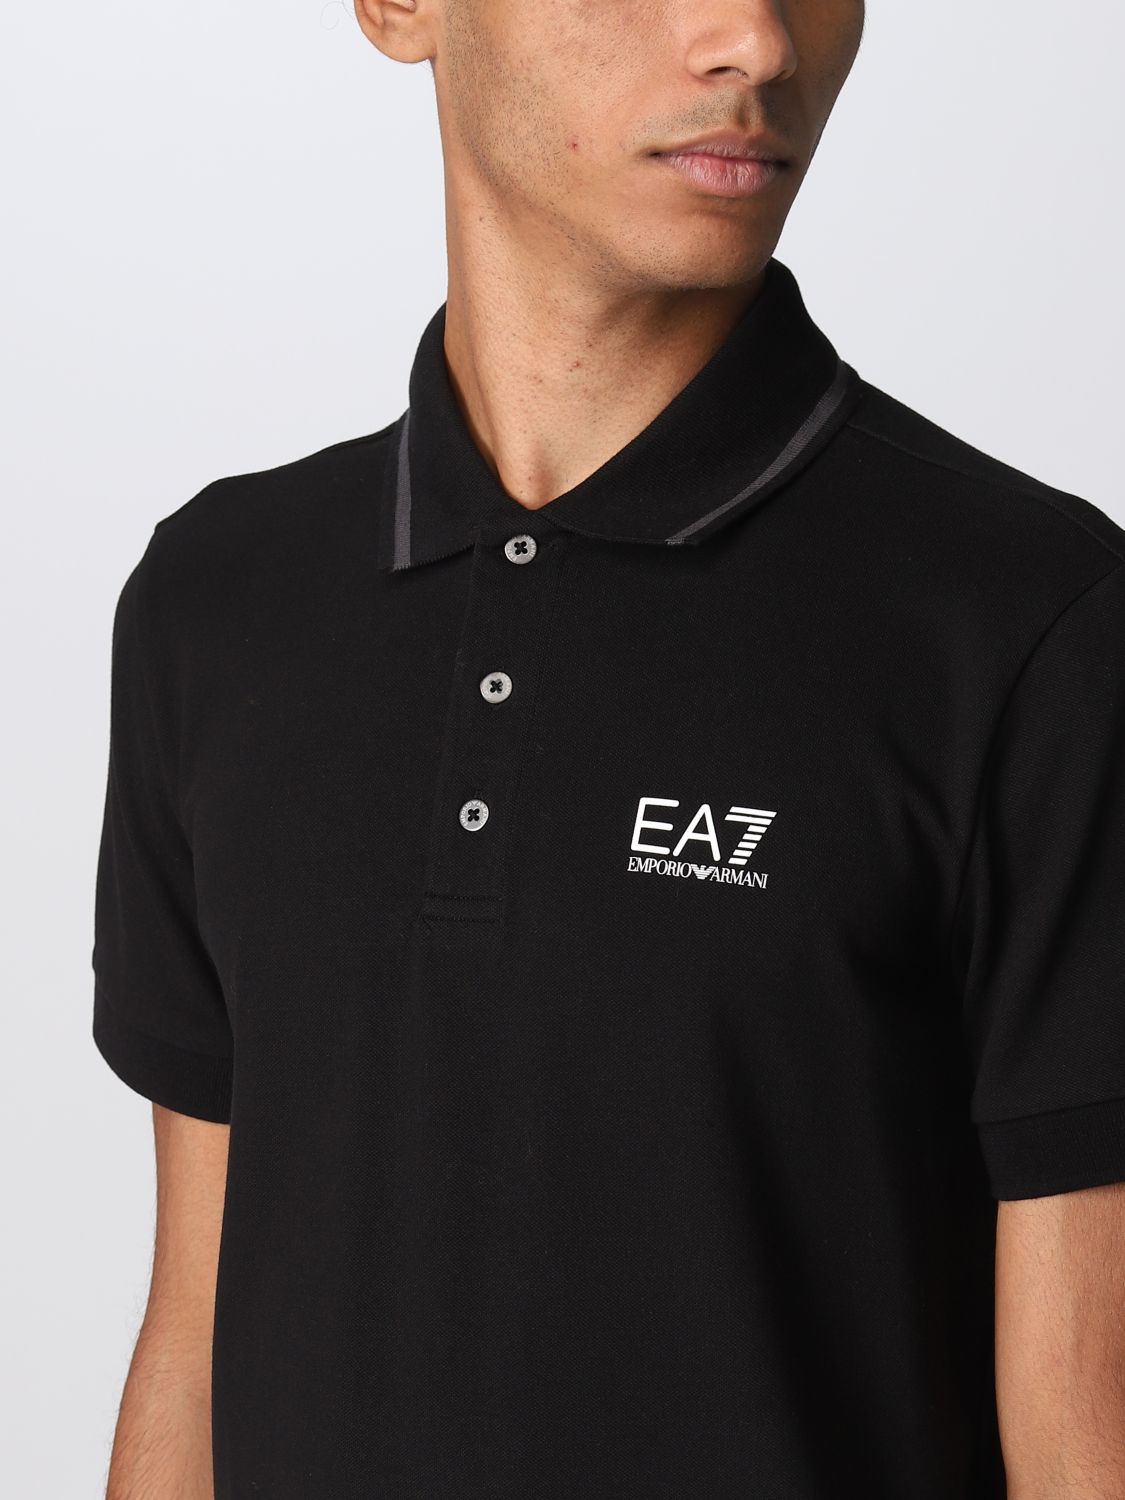 EA7: polo shirt for man - Black | Ea7 polo shirt 8NPF06PJ04Z online on ...